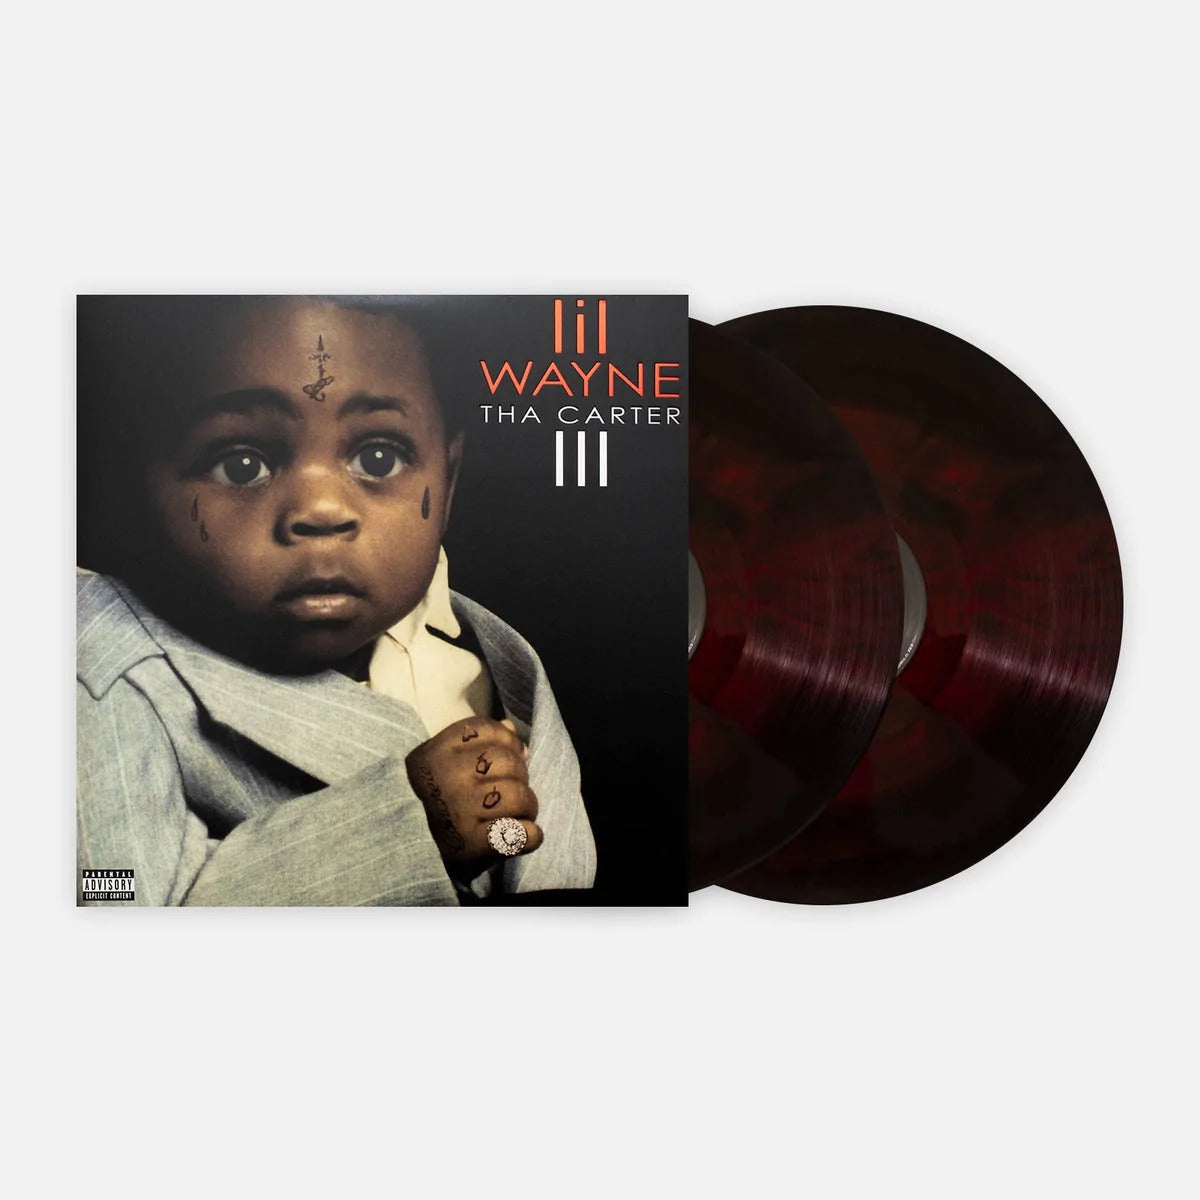 Lil Wayne - Tha Carter III 2LP (Vinyl Me Please Edition, Red & Black Galaxy Vinyl, Foil Stamped)